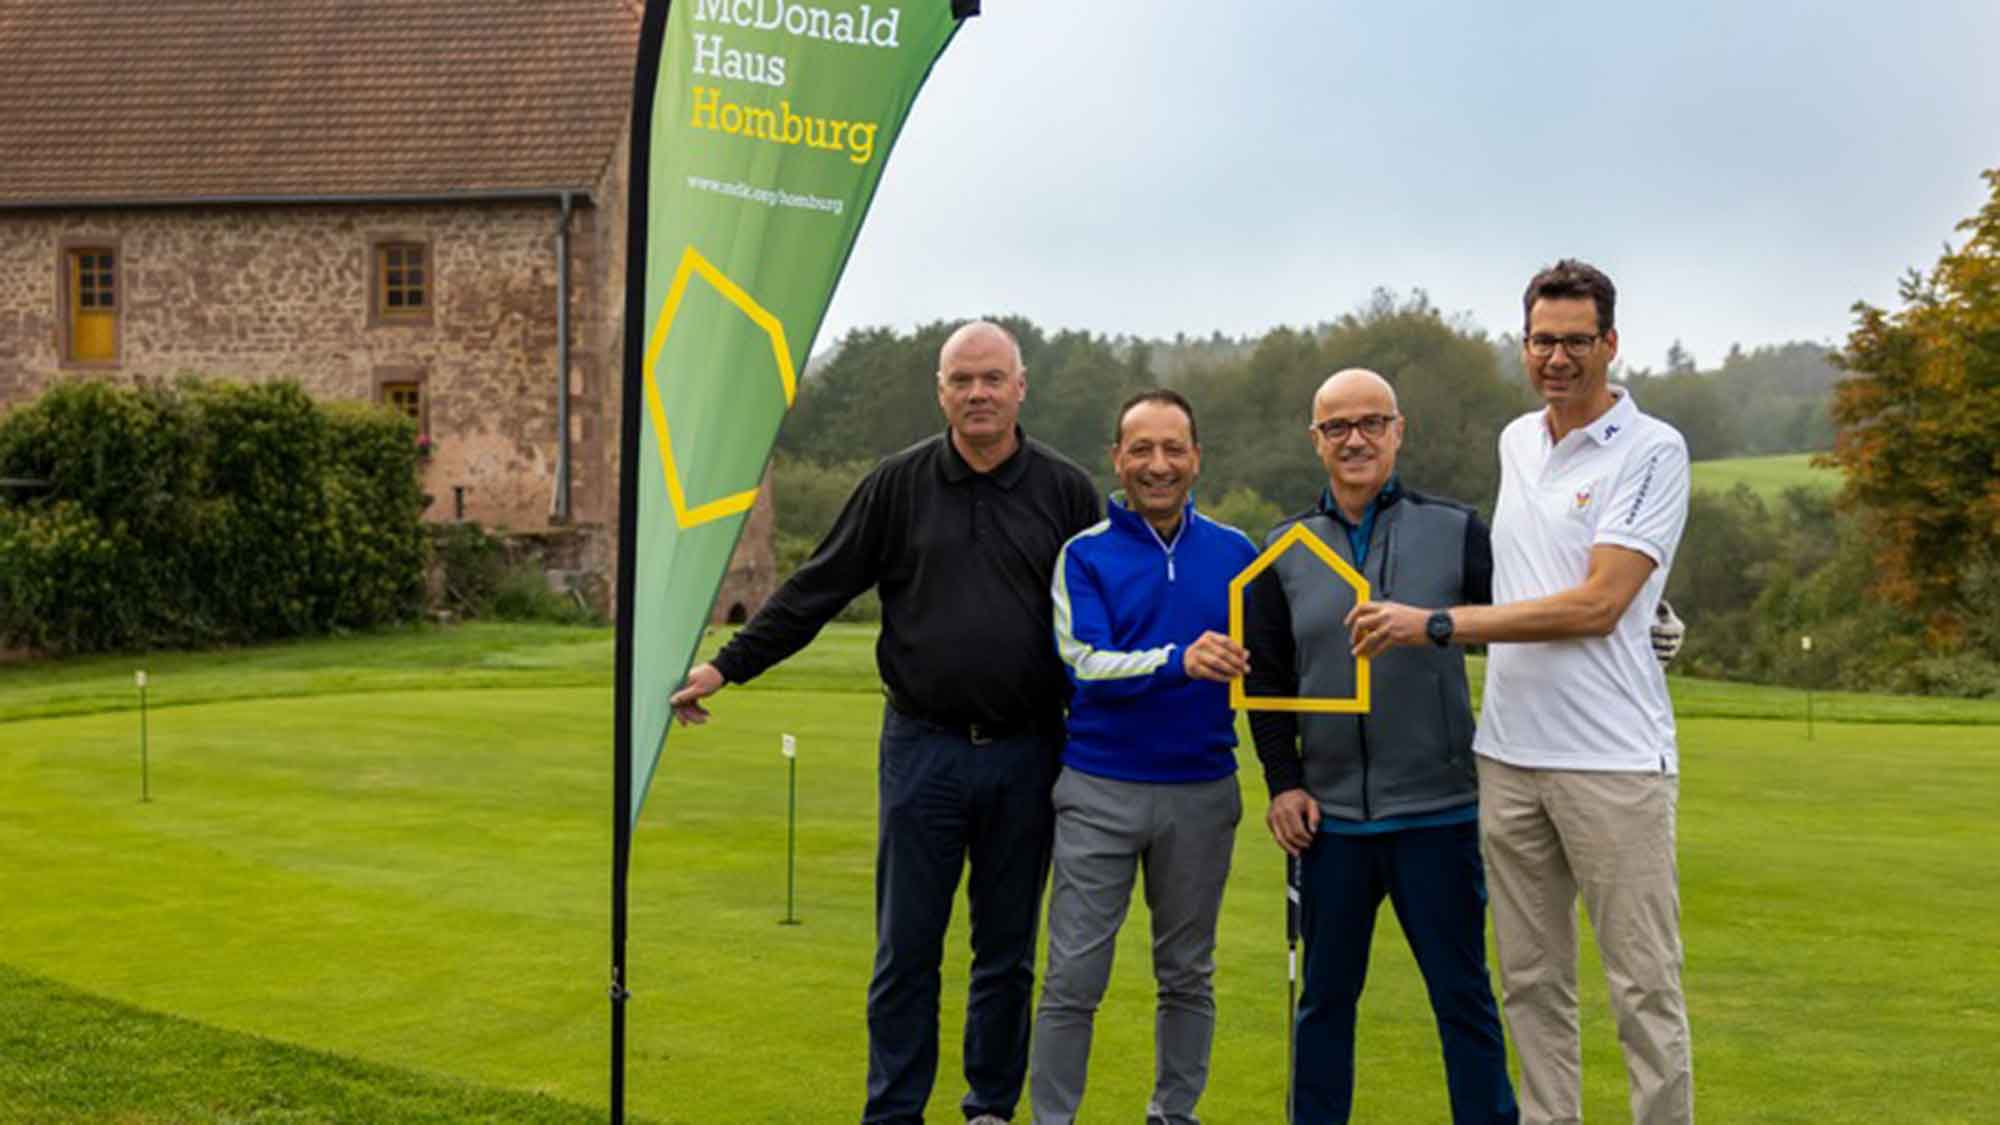 Spielend Gutes tun: 7. McDonald’s Kinderhilfe Golf Cup in Homburg